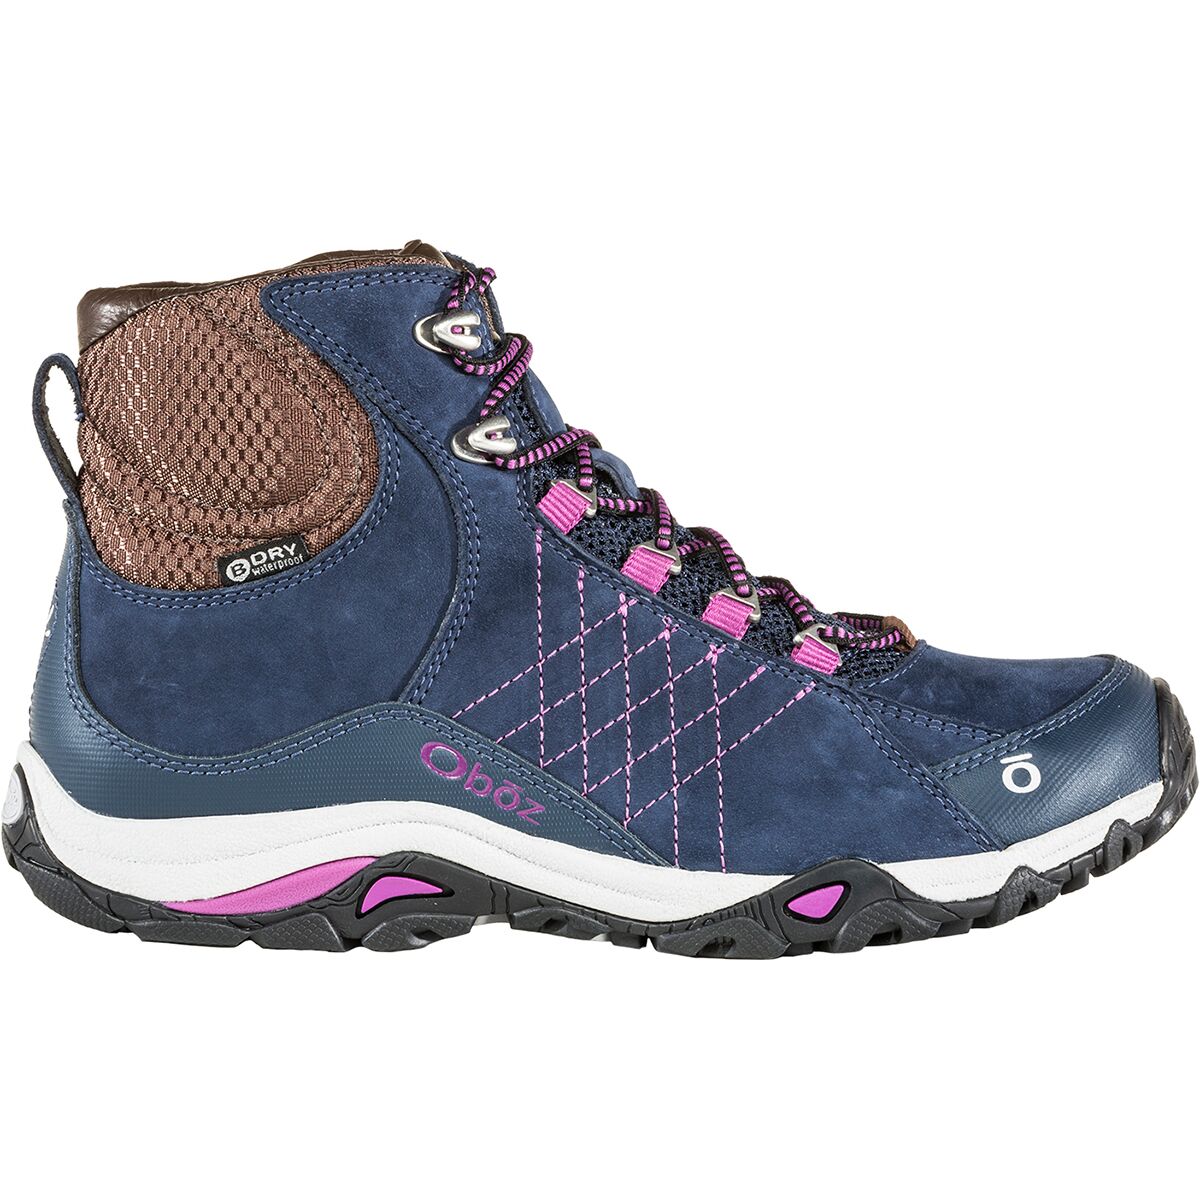 Sapphire Mid B-Dry Hiking Boot - Wide - Women